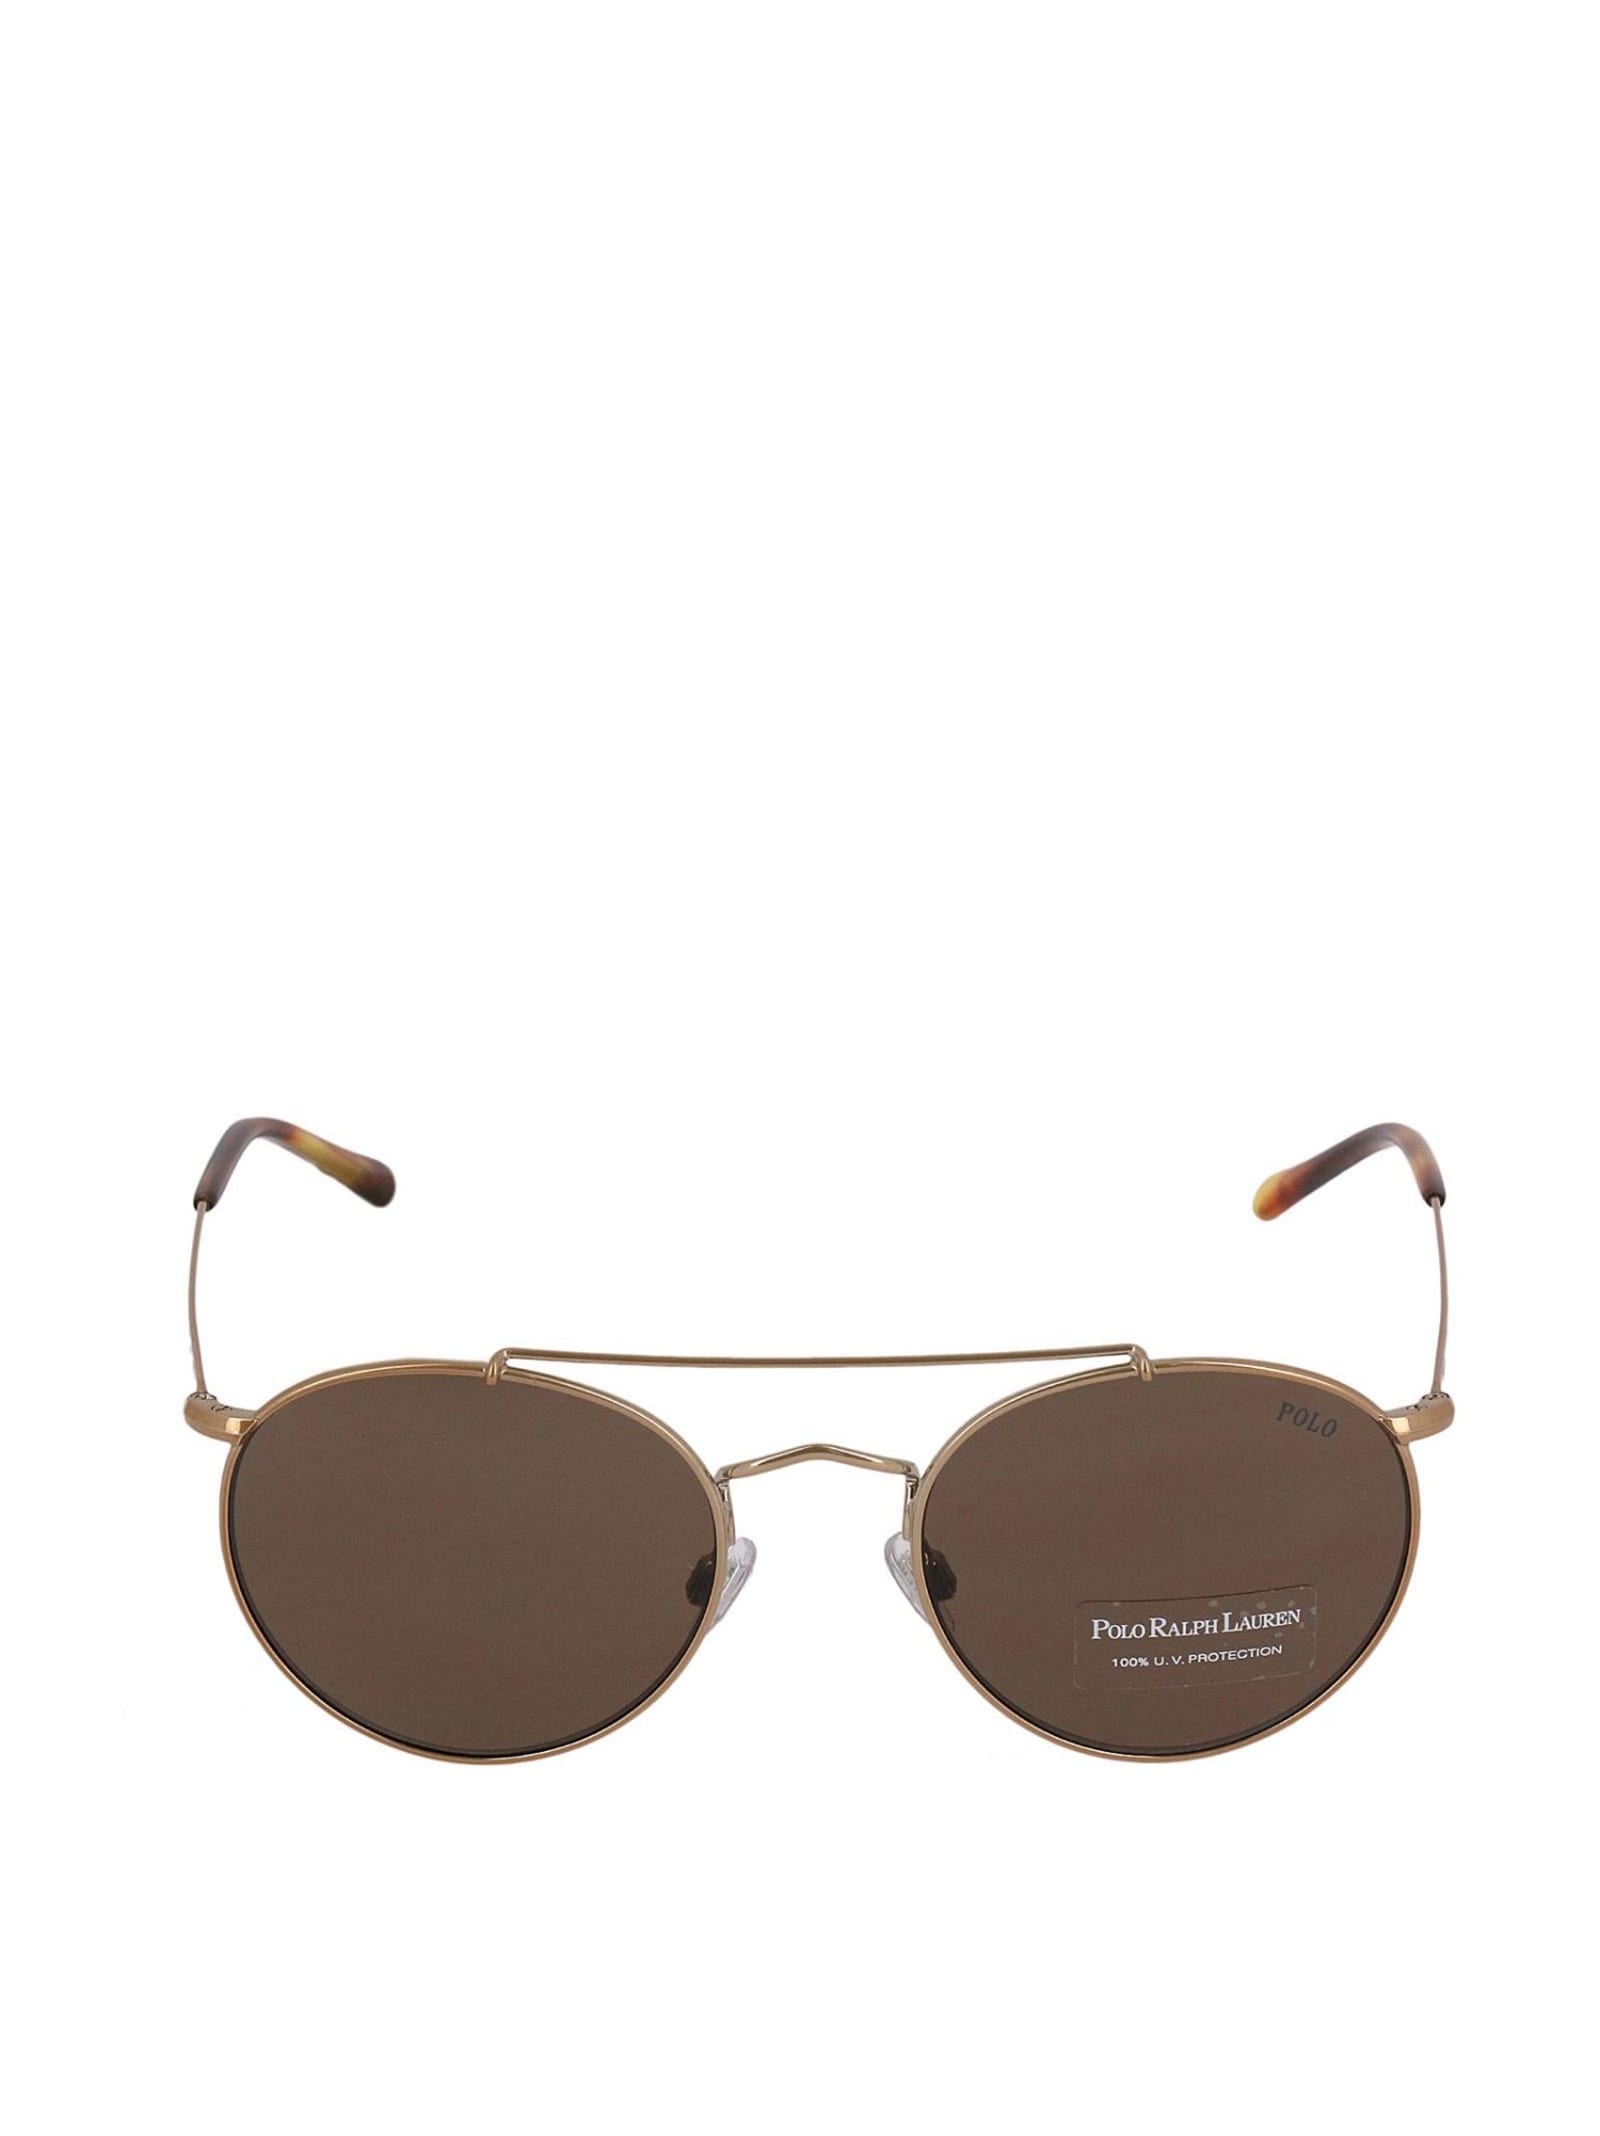 Polo Ralph Lauren Ph3114 9334/73 Sunglasses